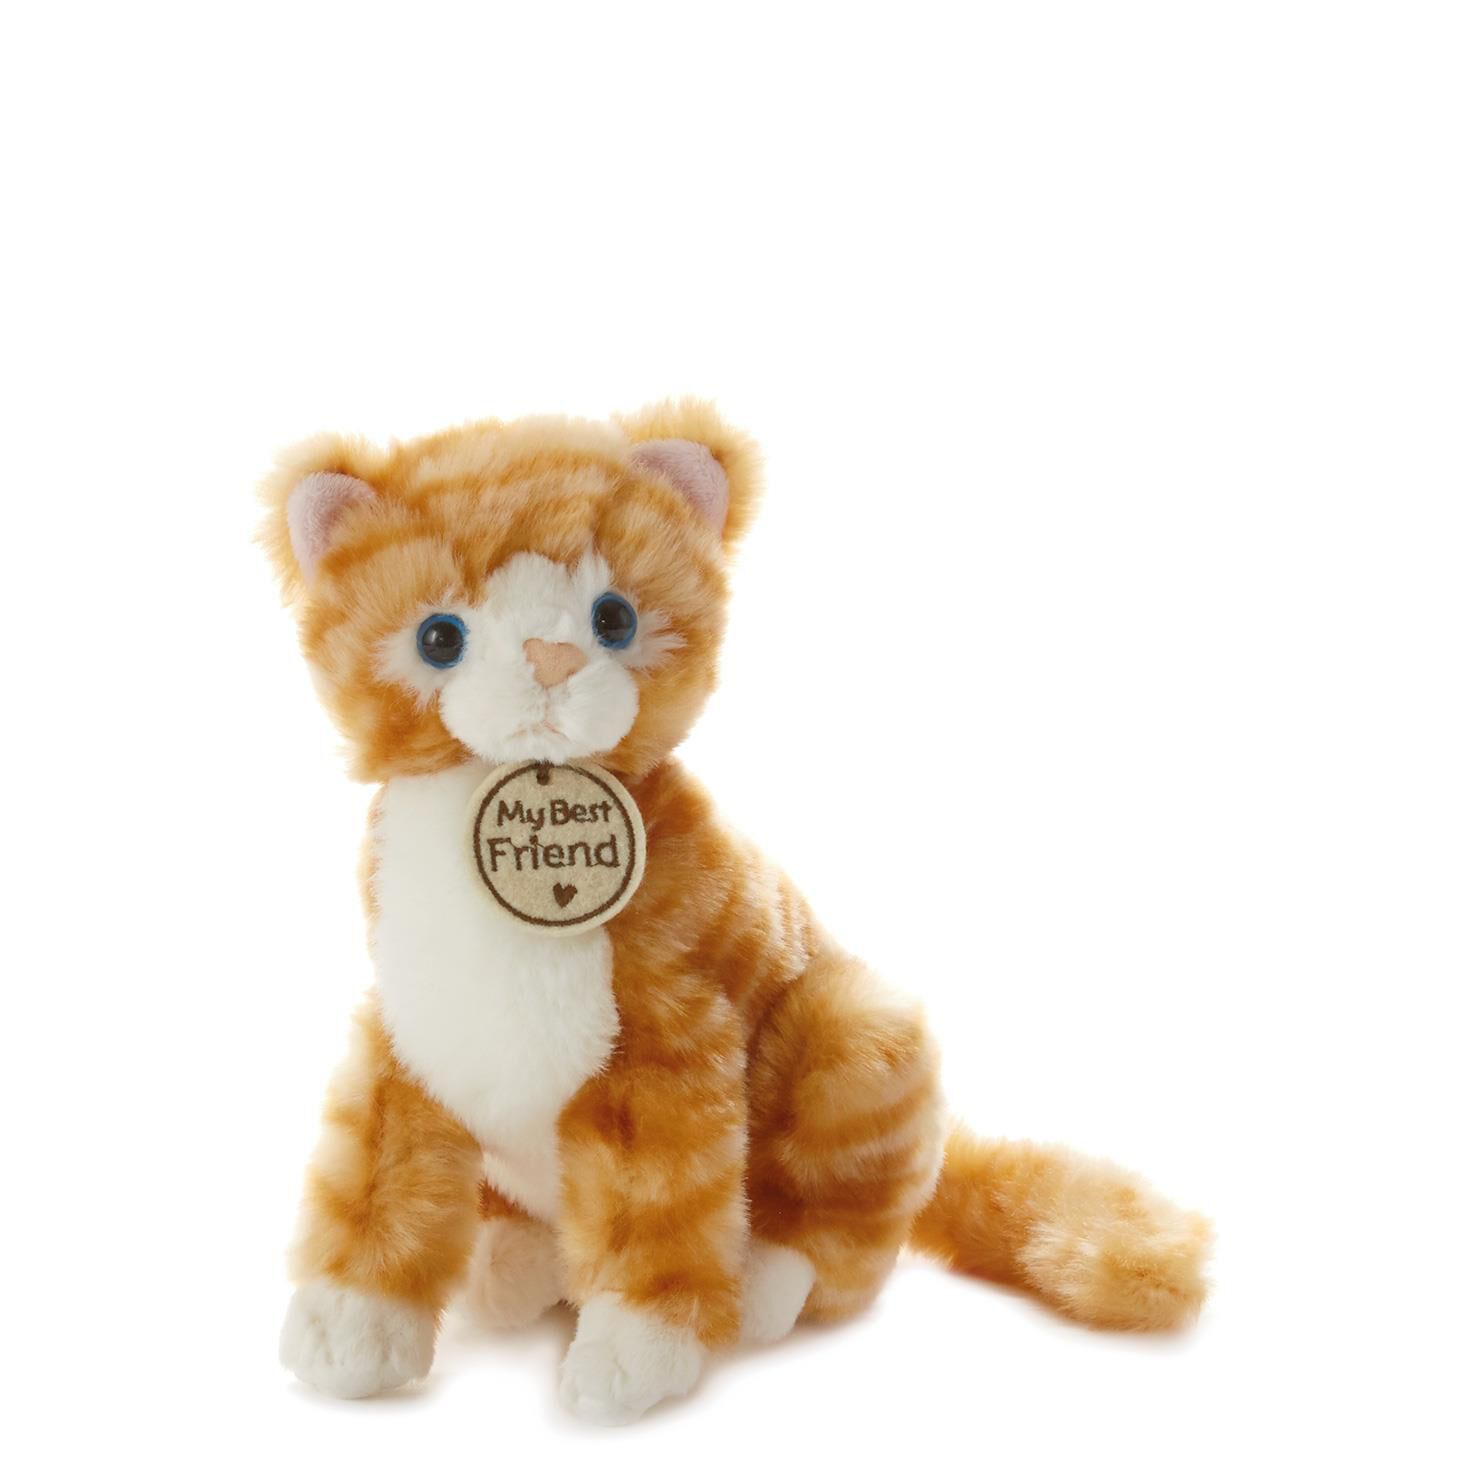 orange tabby cat stuffed animal